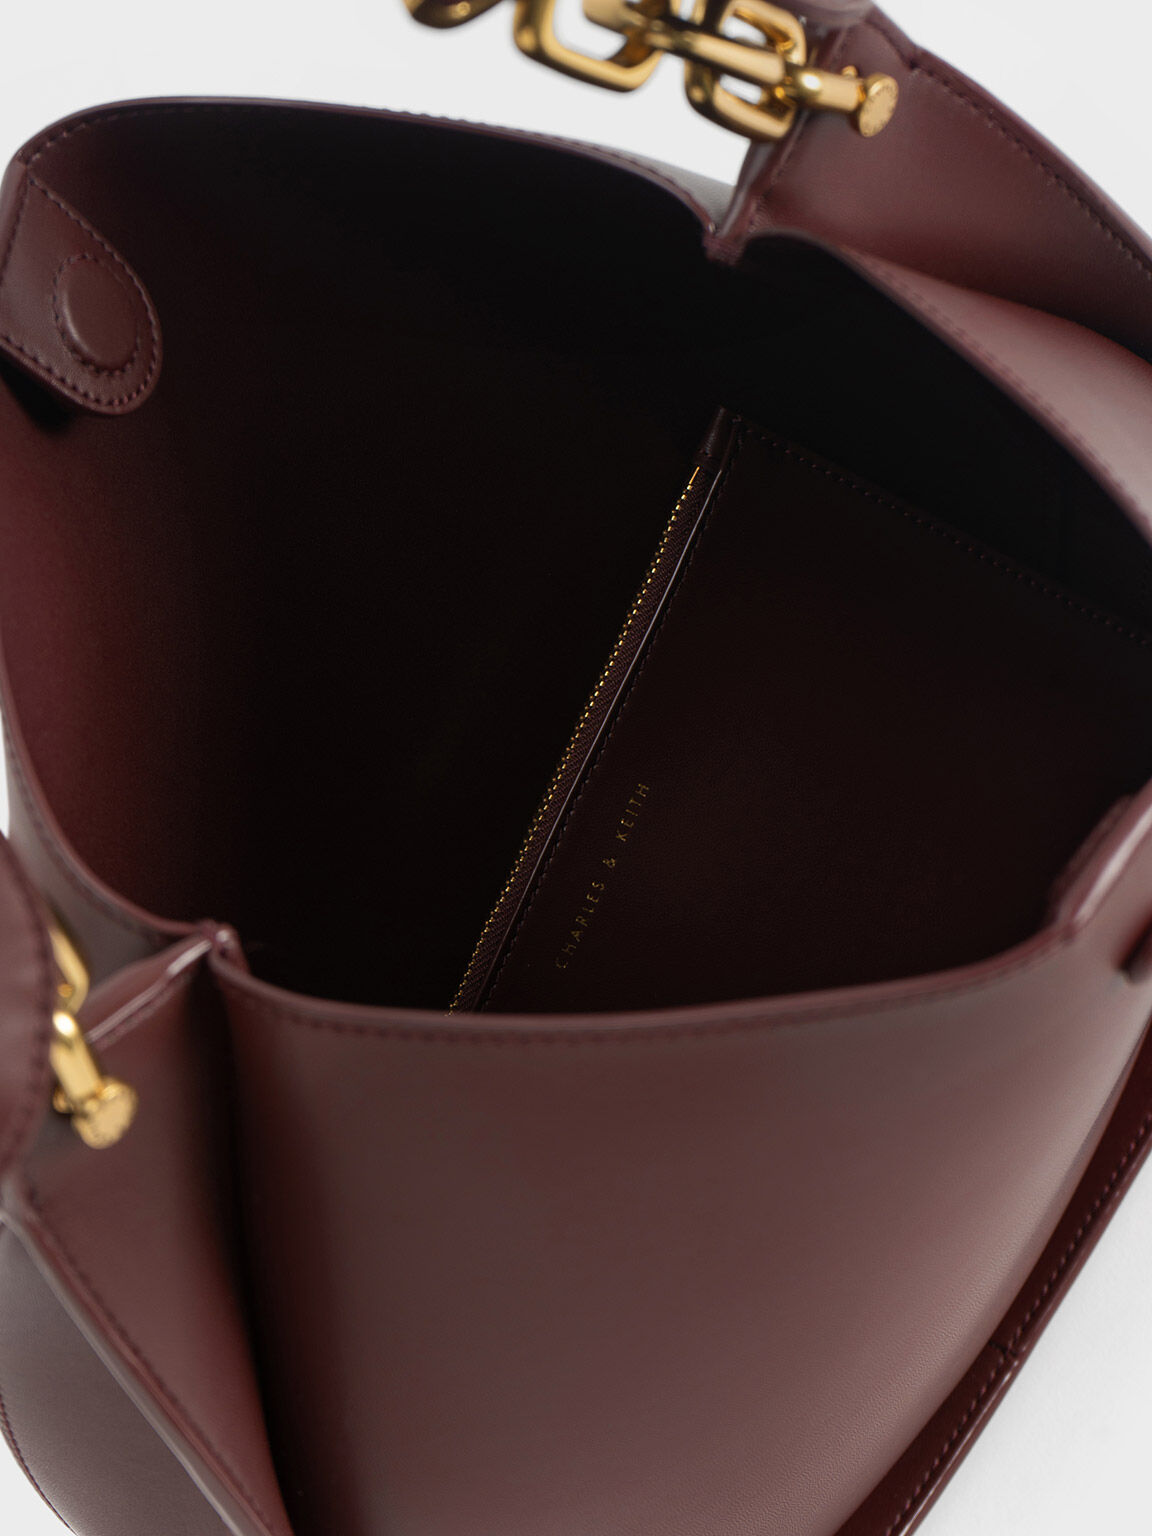 Cleona Braided Handle Shoulder Bag, Dark Chocolate, hi-res